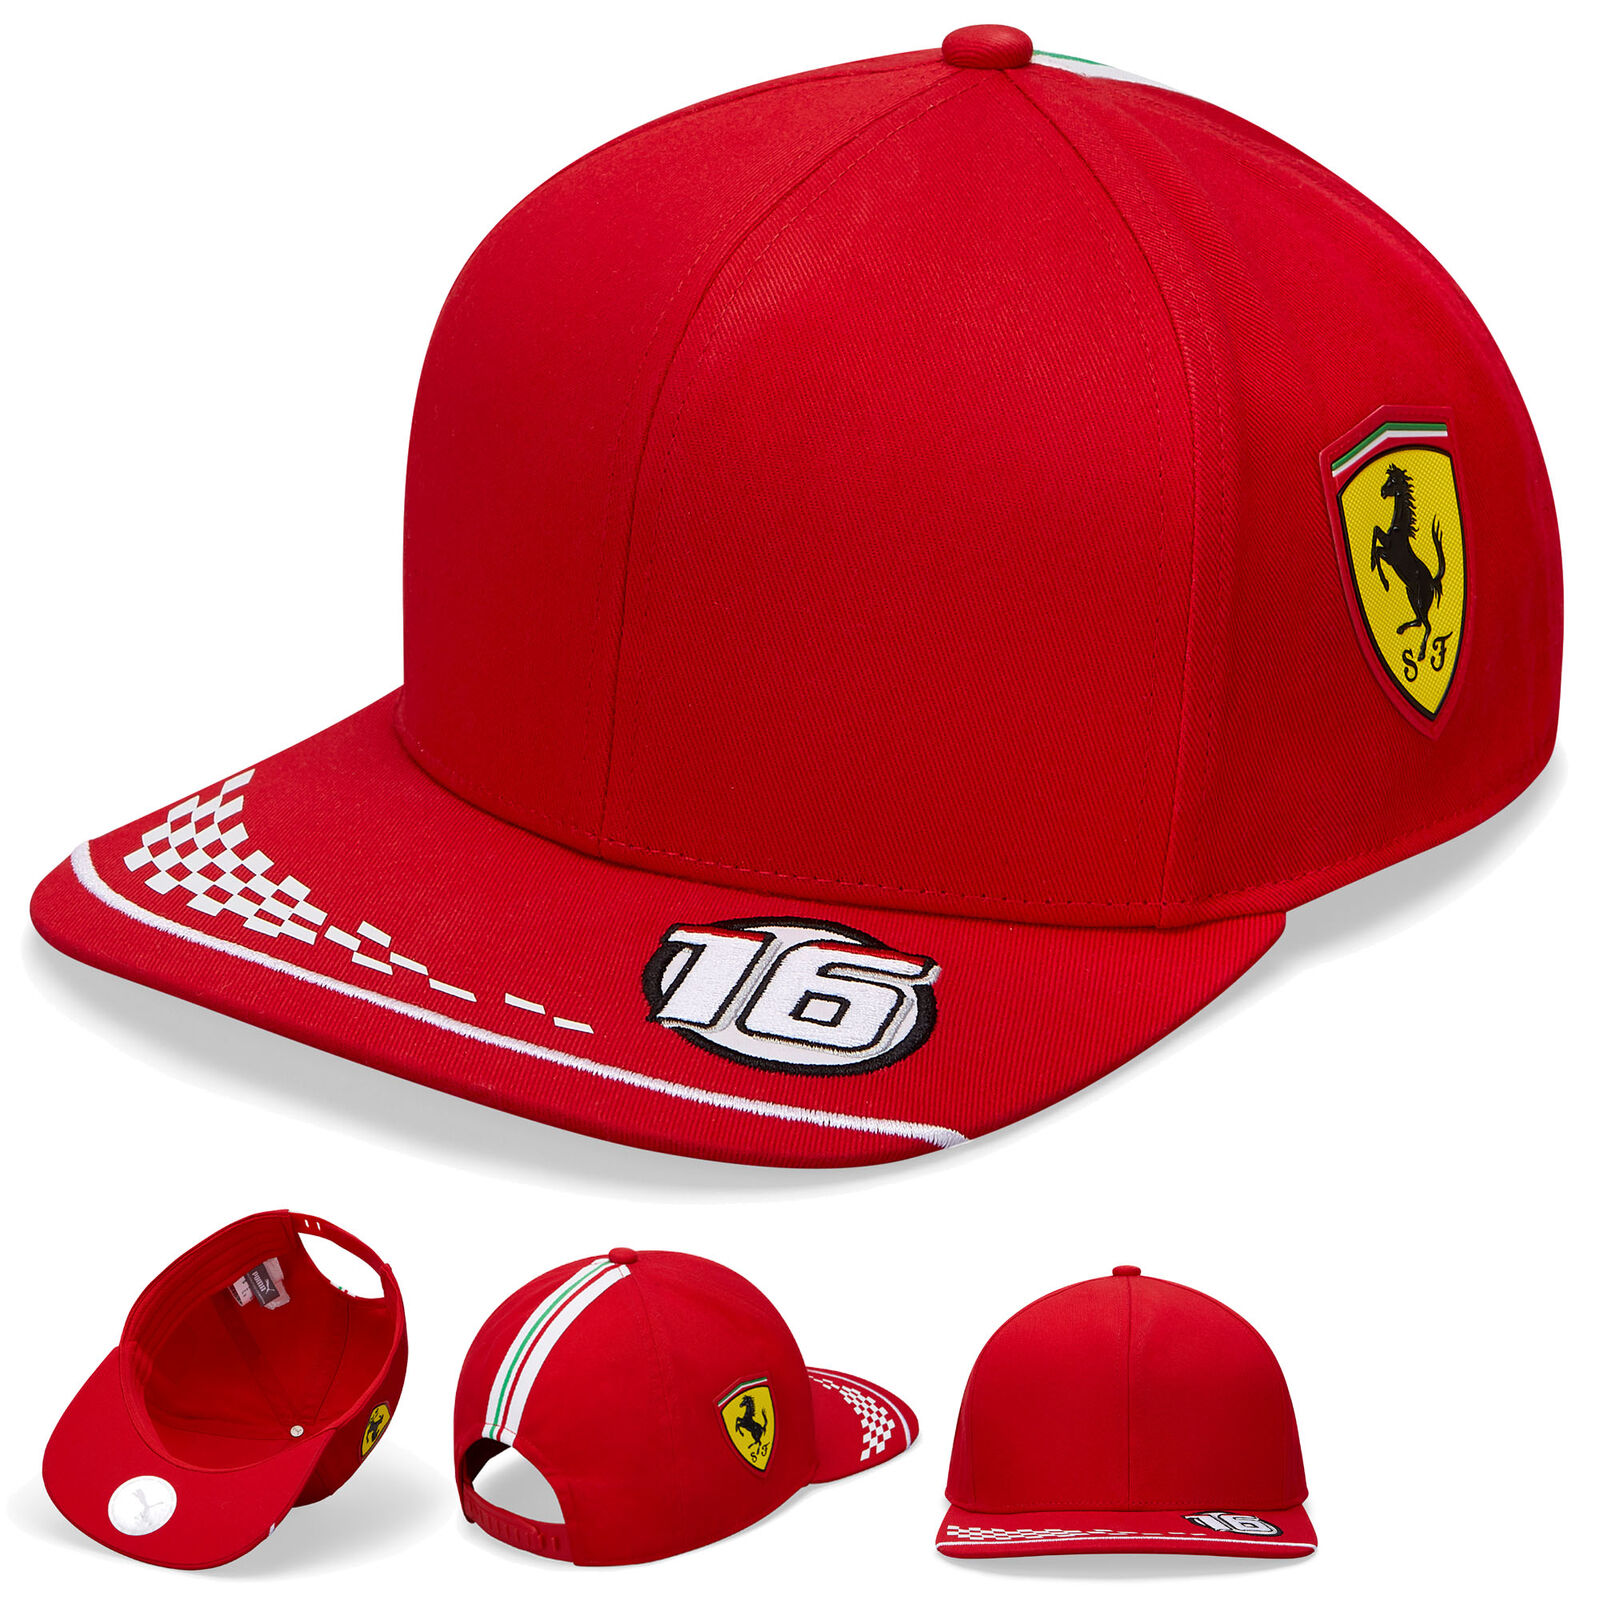 Scuderia Ferrari Charles Leclerc Cap フェラーリ シャルル・ルクレール オフィシャル キャップ 帽子 レッド